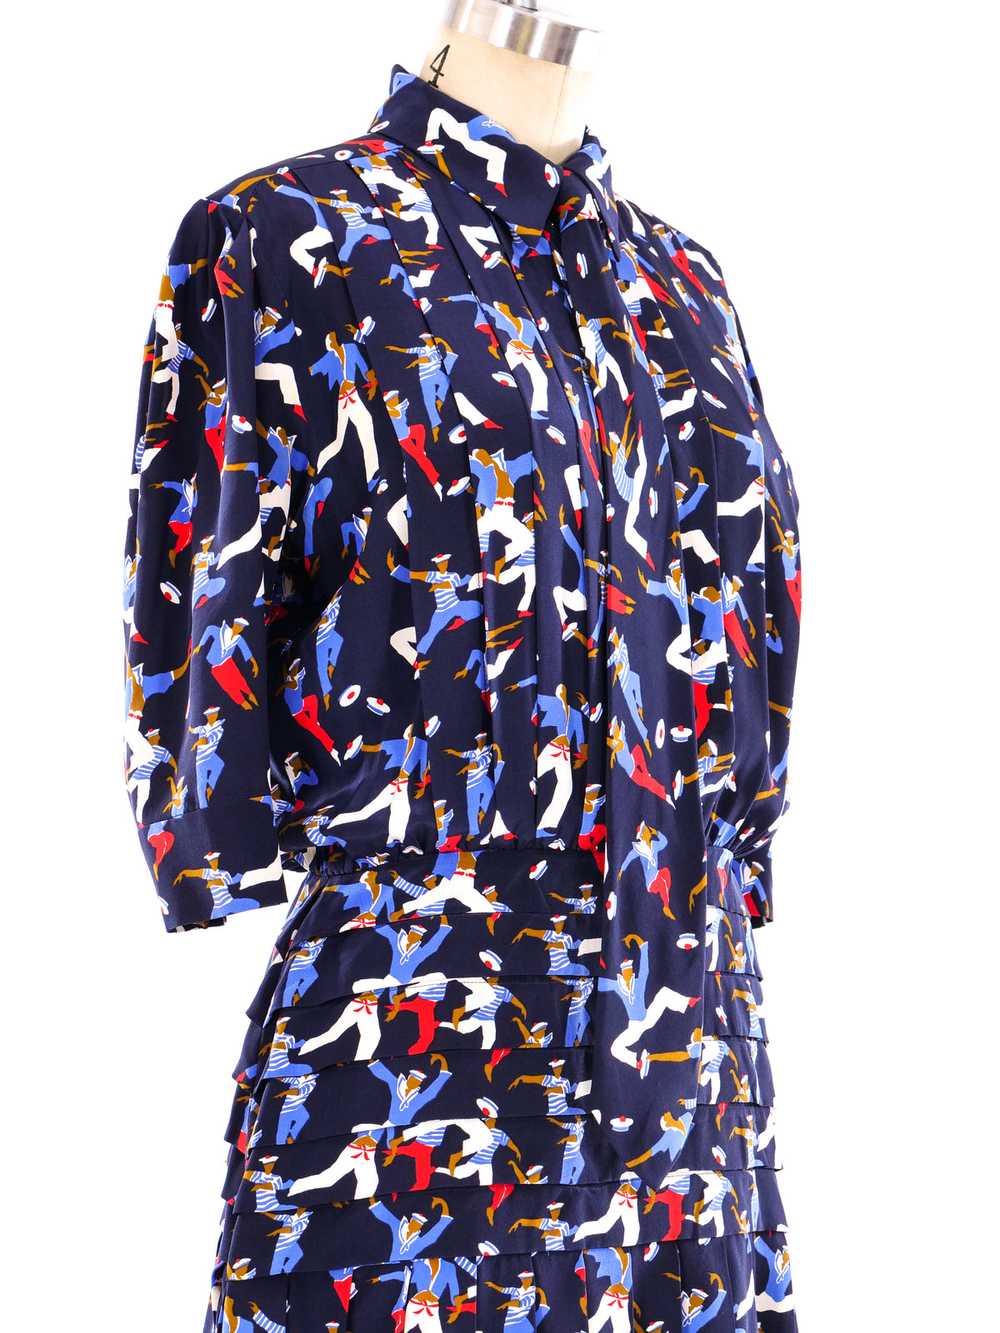 Yves Saint Laurent Sailor Printed Silk Dress - image 5